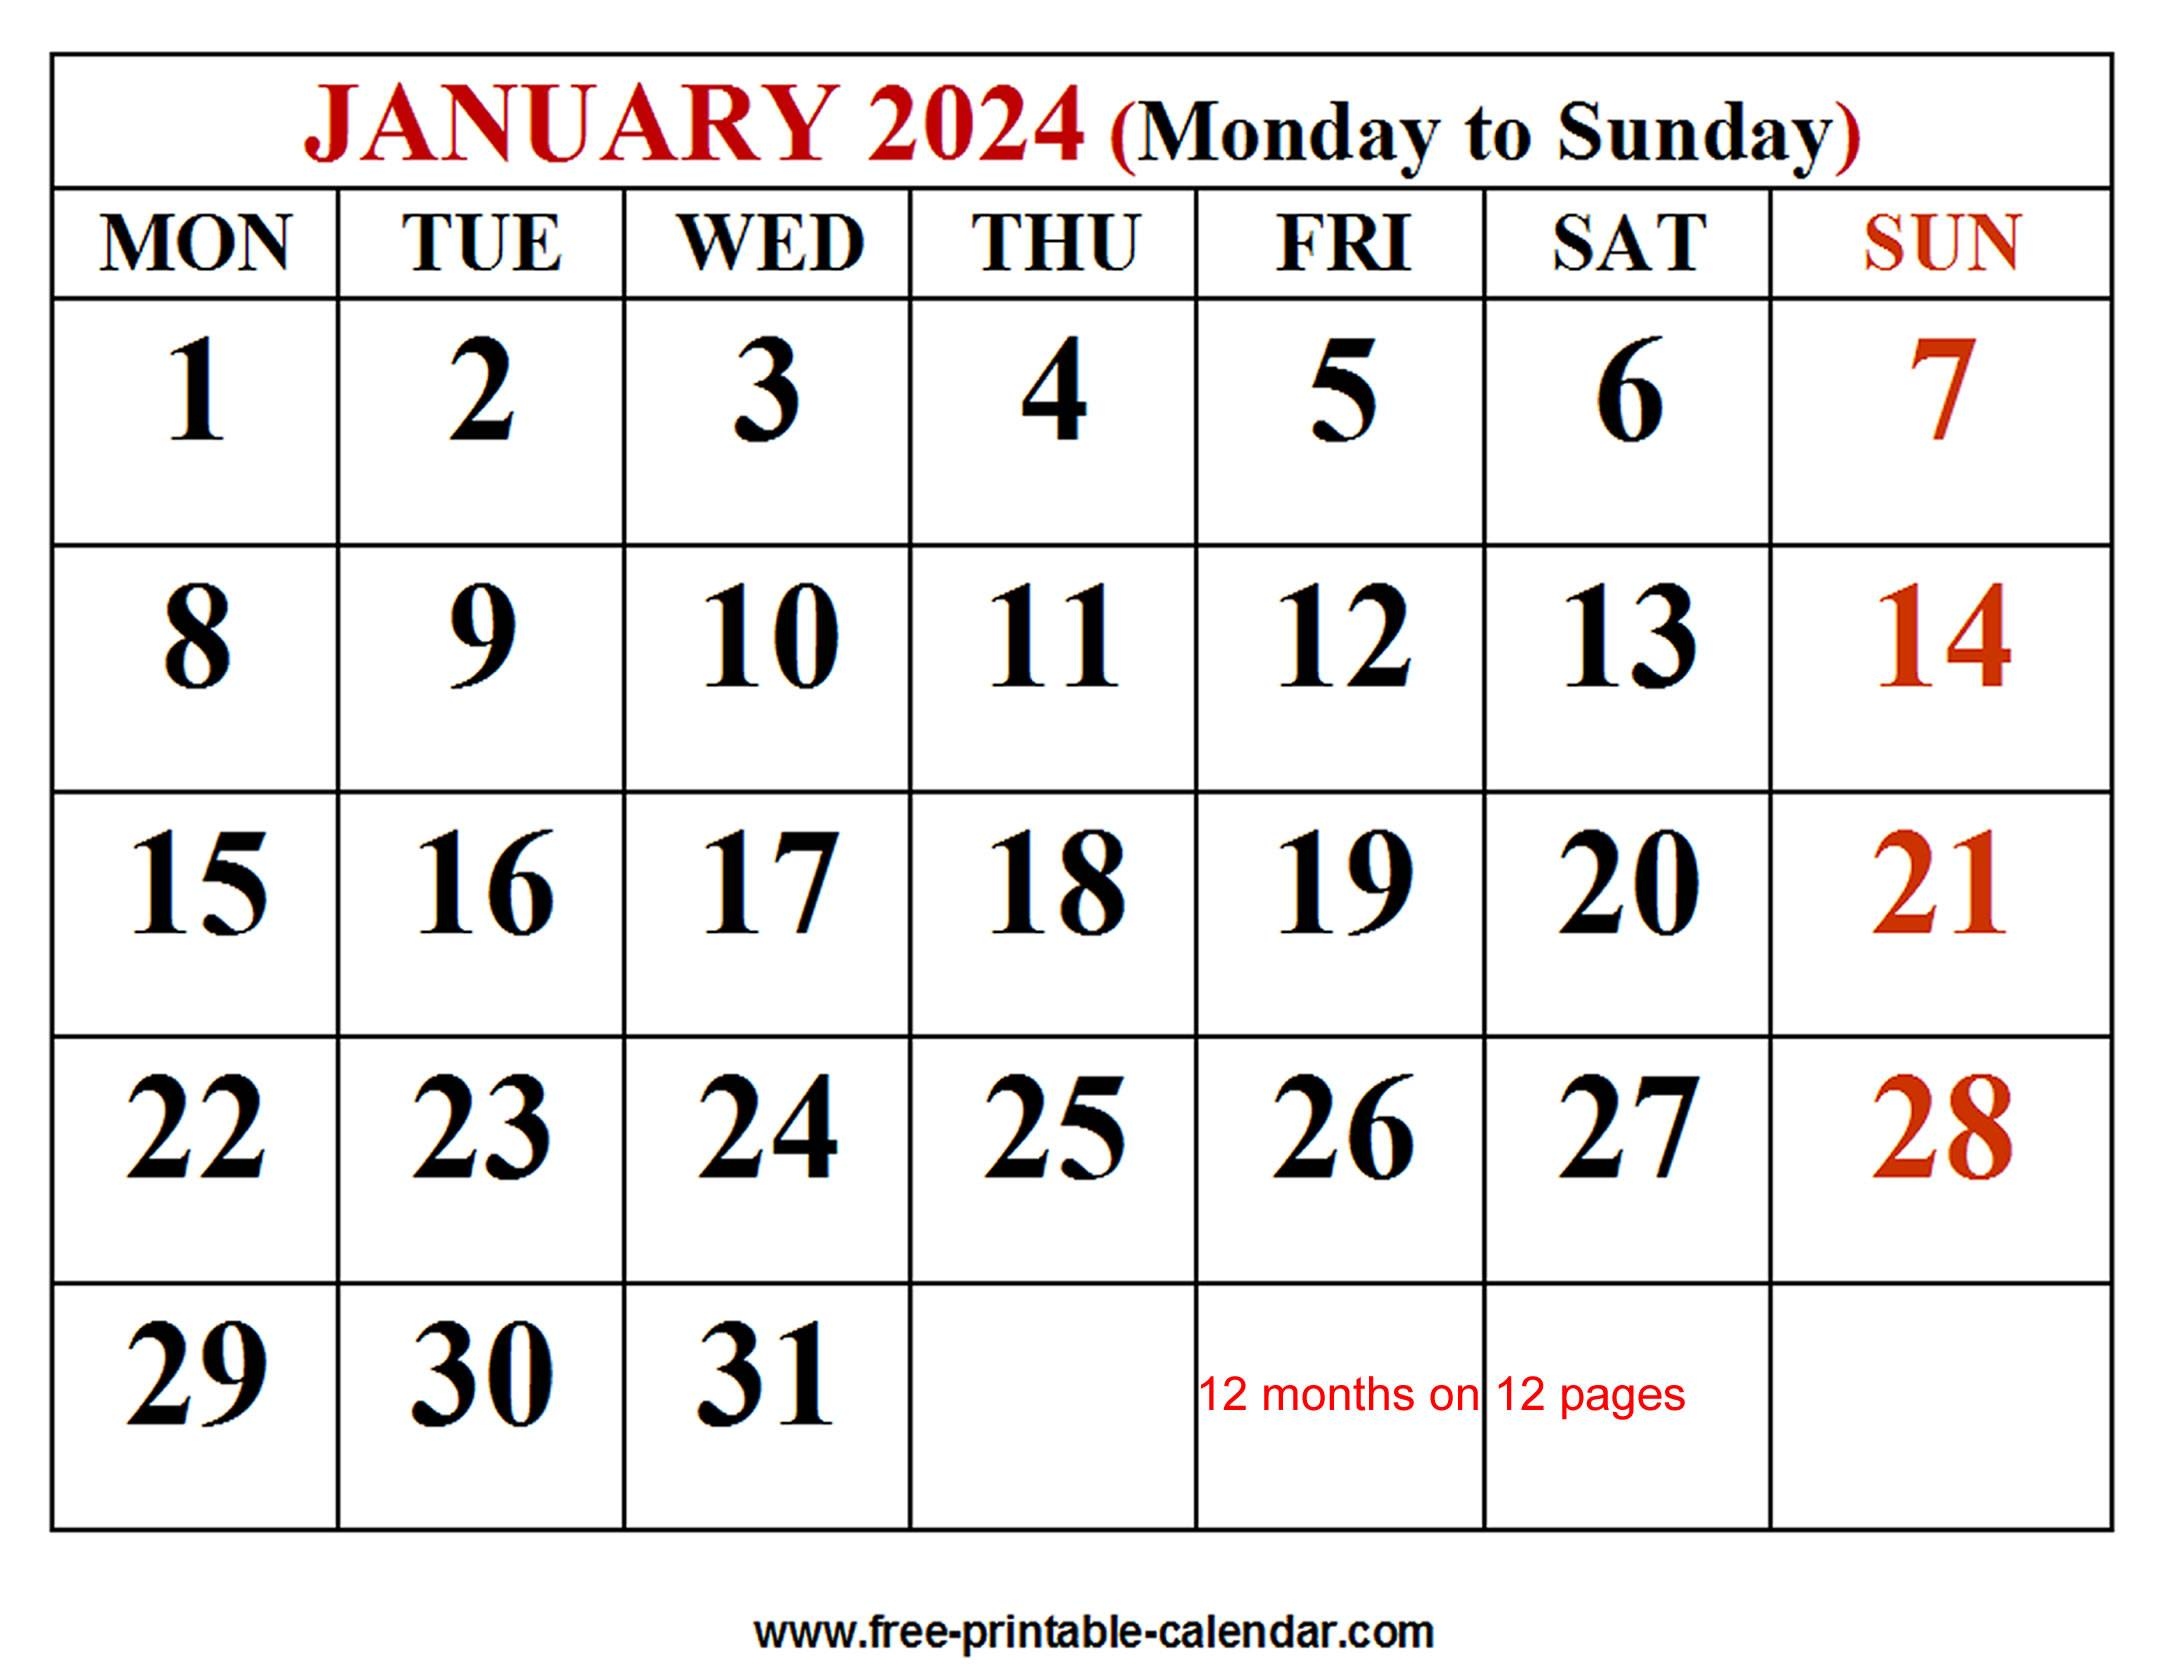 2024 Calendar Template - Free-Printable-Calendar regarding Free Printable And Editable Calendar 2024